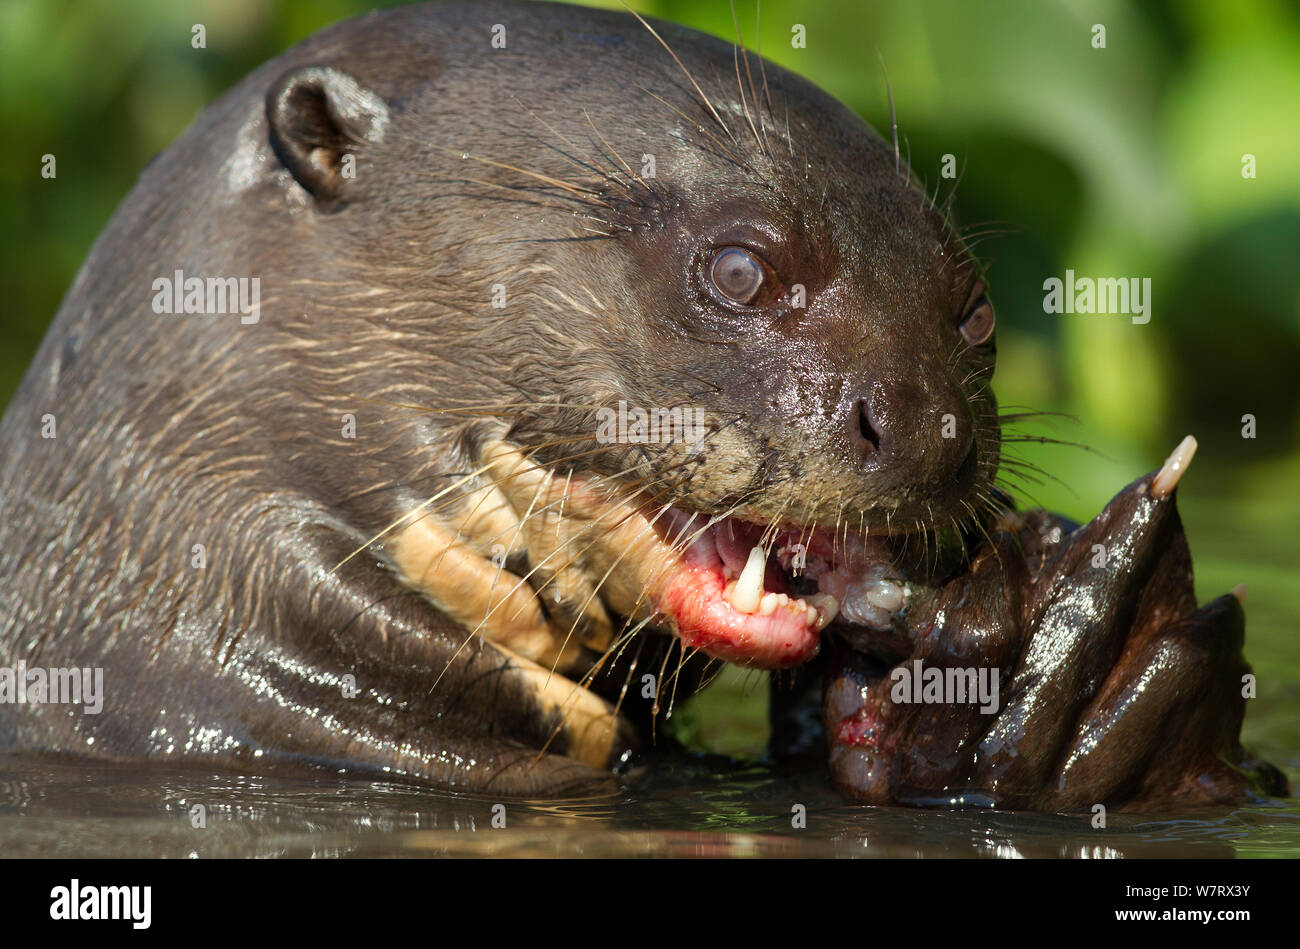 Lobo de río (Pteronura brasiliensis), alimentándose de peces, río Cuiaba, Brasil. Foto de stock